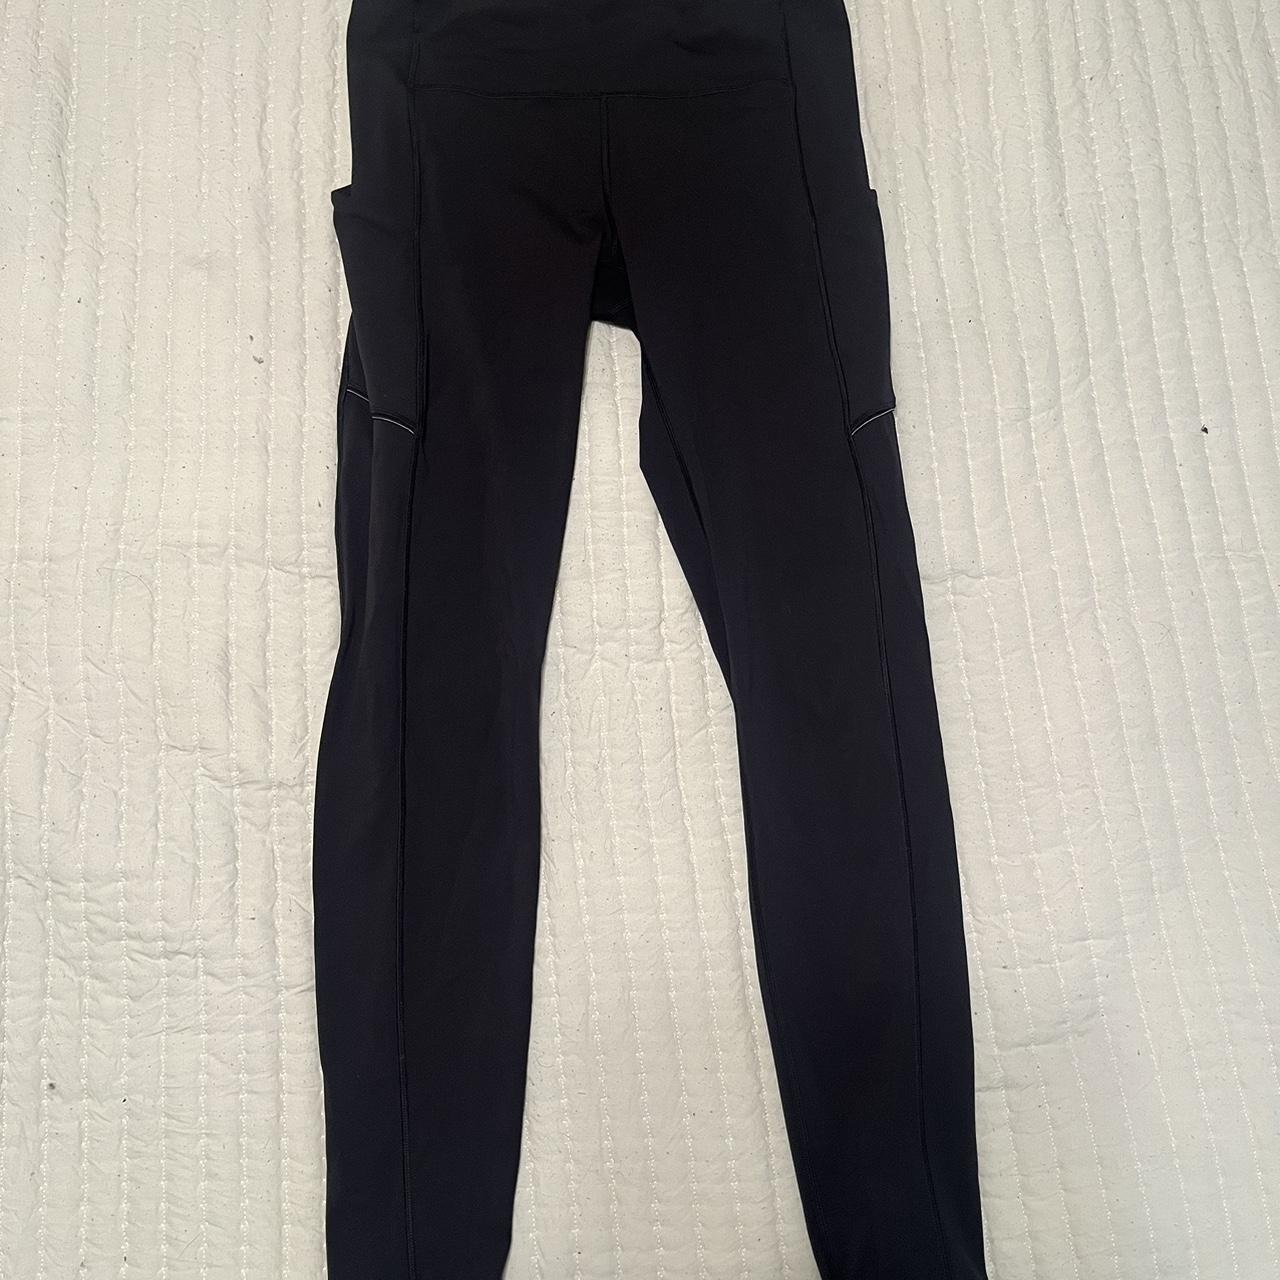 Black lululemon leggings with pockets Tiny hole on - Depop